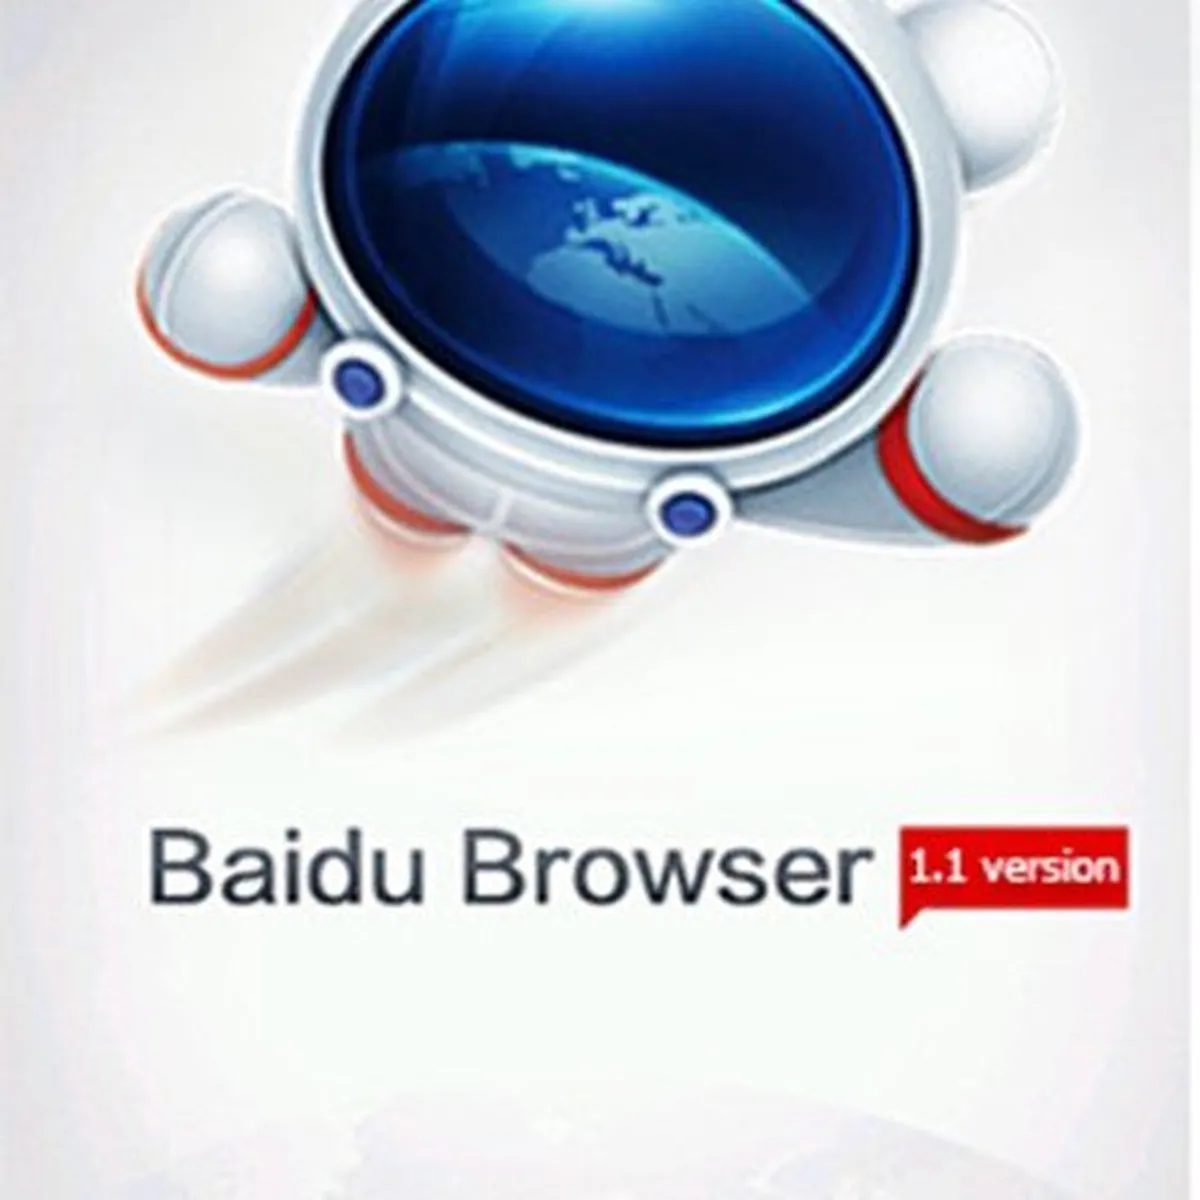 Baidu Browser Review